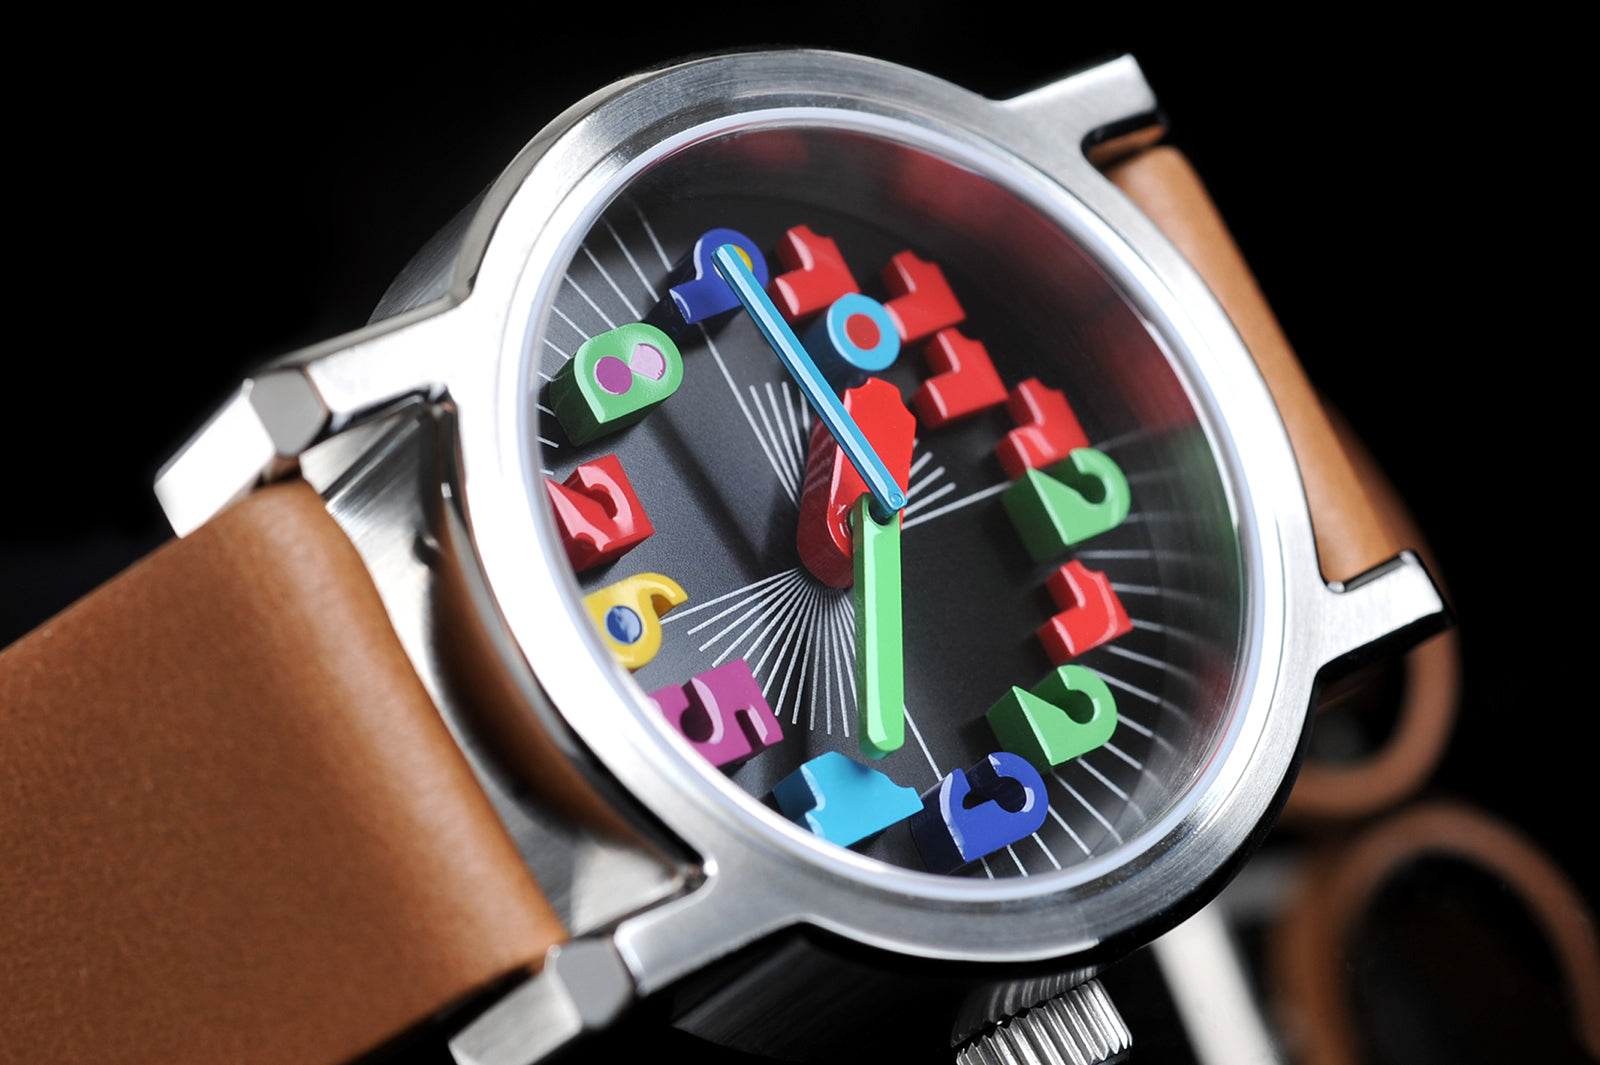 M/M Paris x Anicorn "2" collection - Timepiece "2HAPPY" (100pcs worldwide)